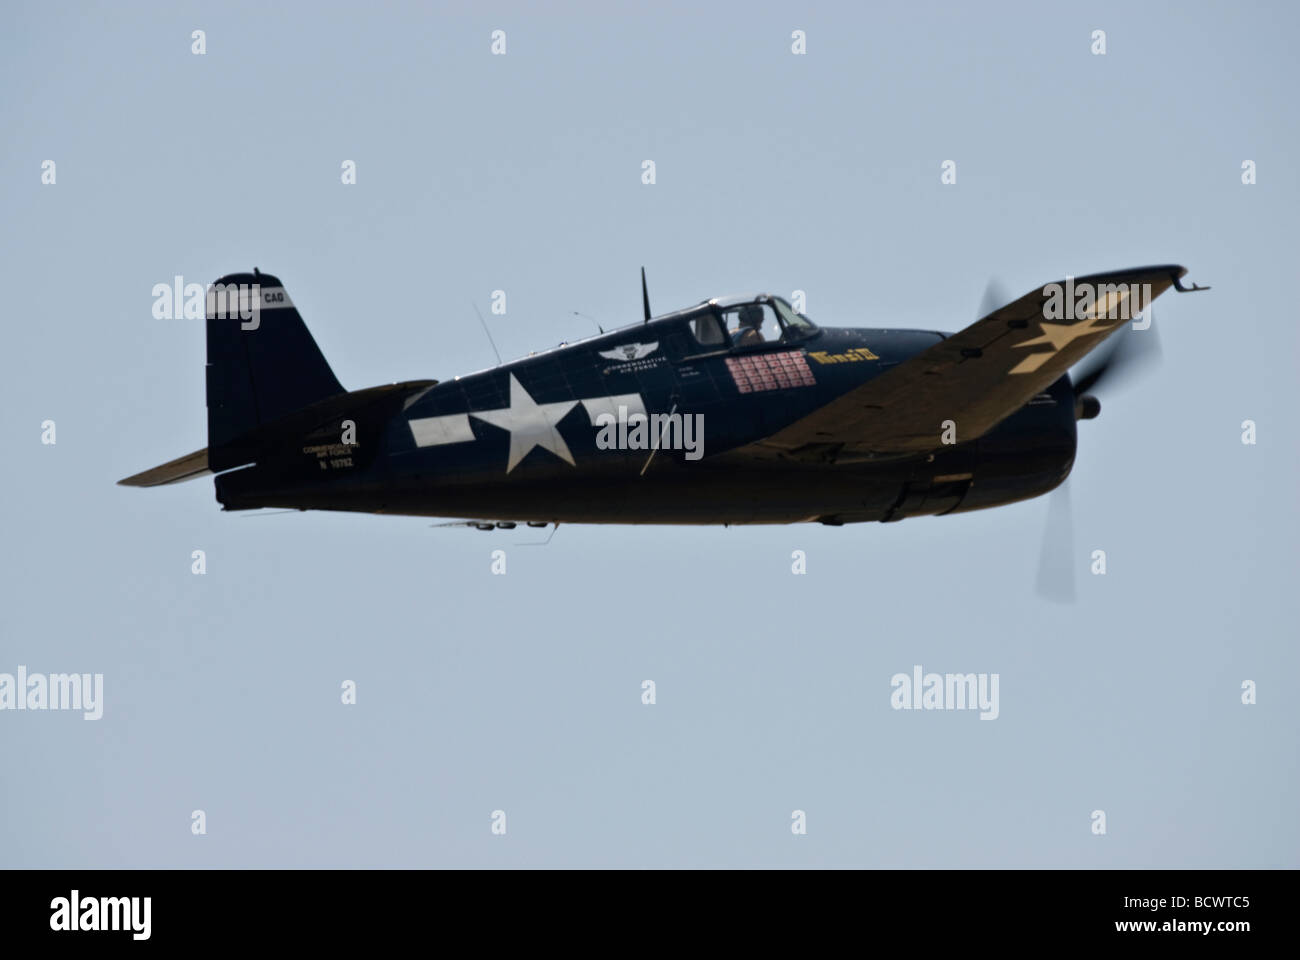 A Grumman F6F Hellcat flies at an air show. Stock Photo